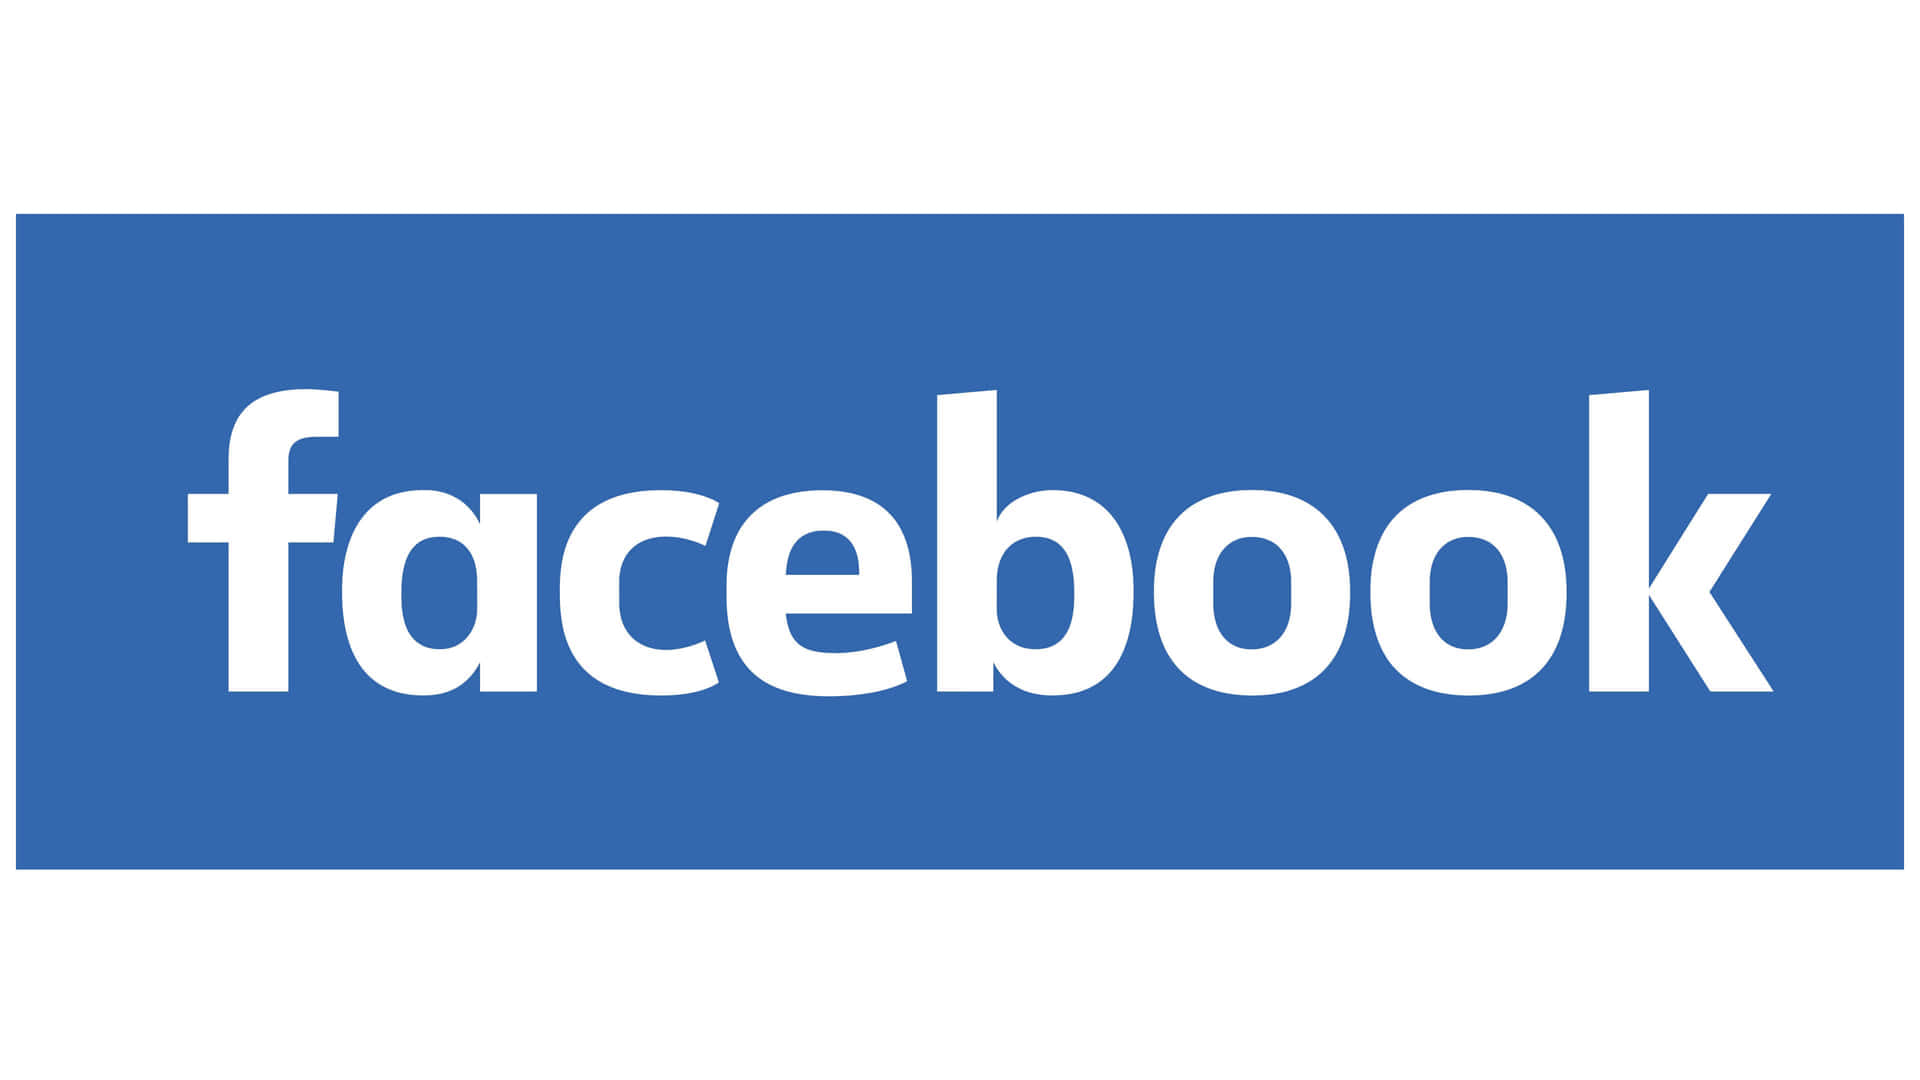 Immaginidel Logo Di Facebook.